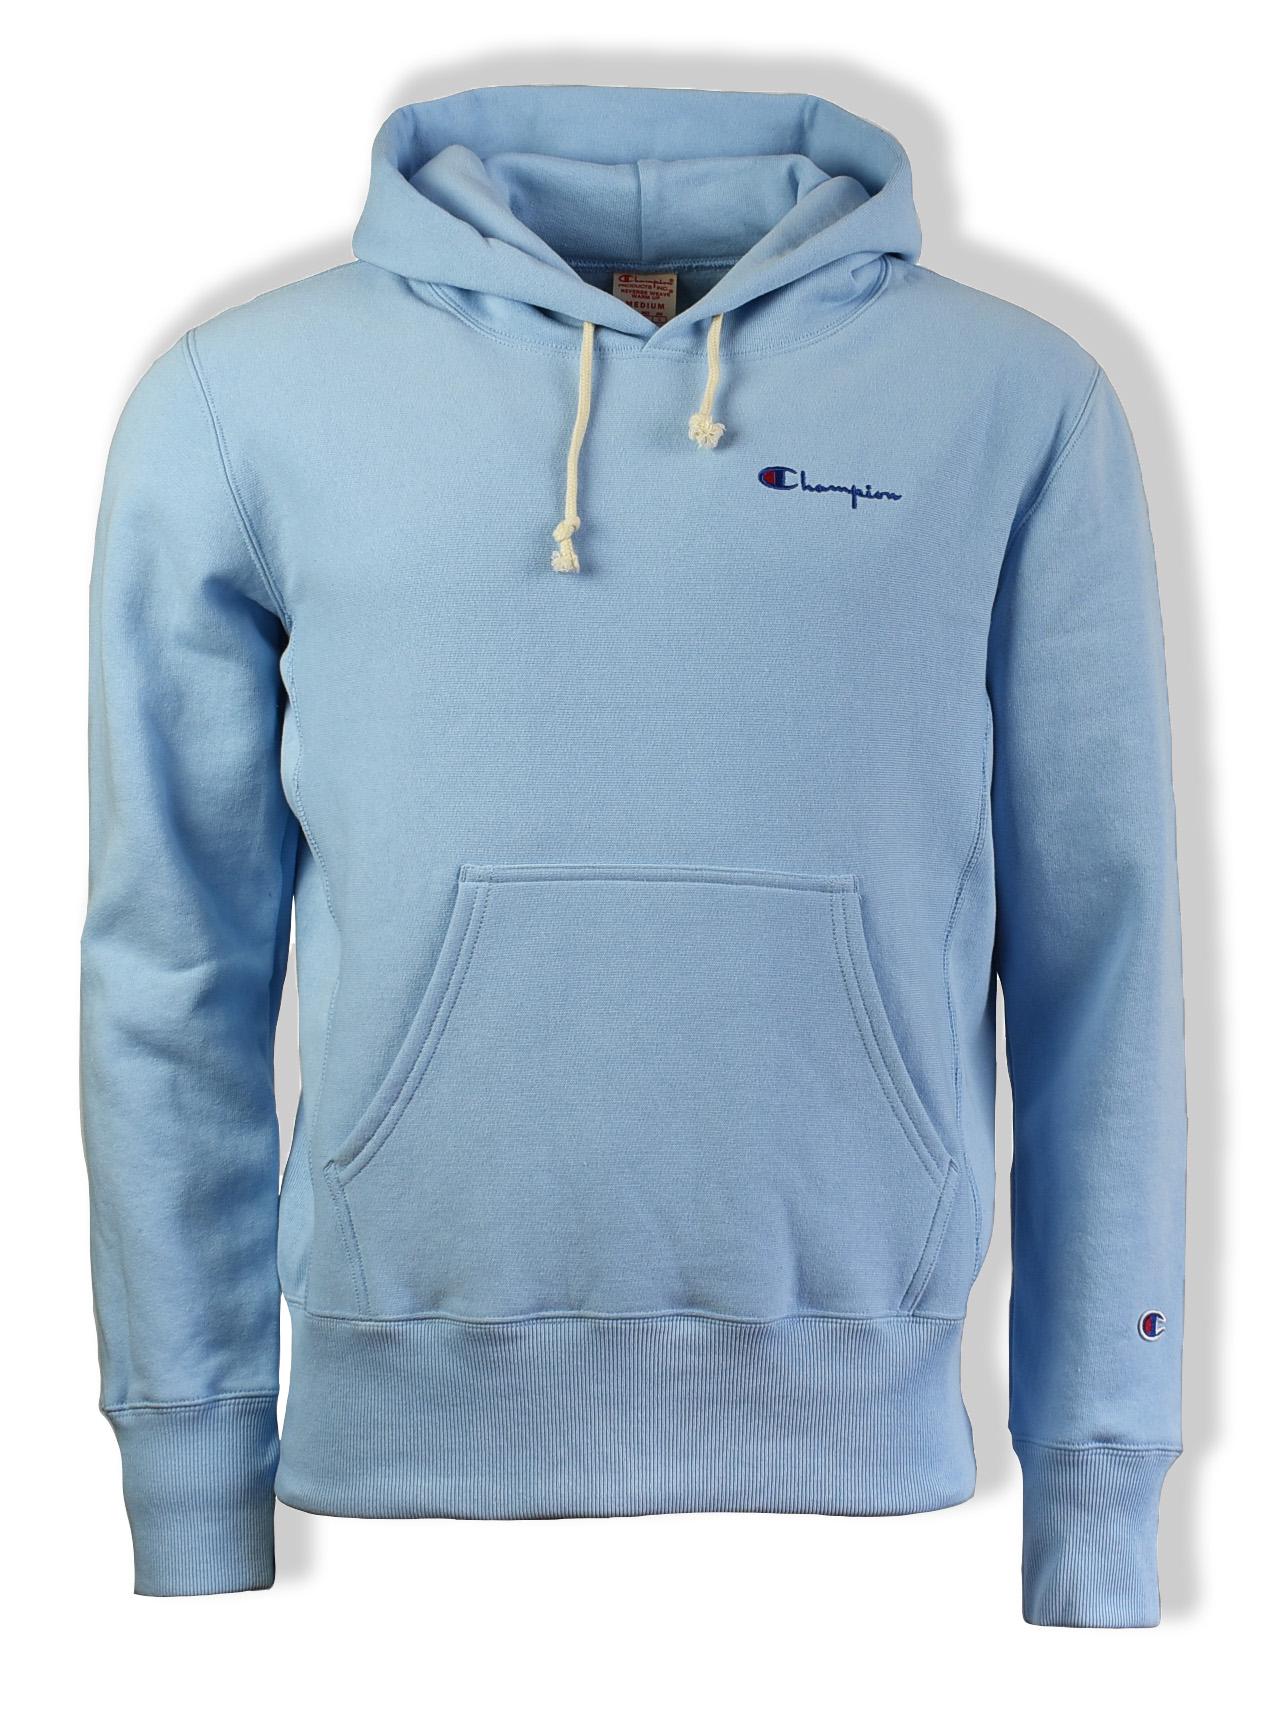 Champion Cotton Light Blue Reverse Weave Hooded Sweatshirt for Men - Lyst